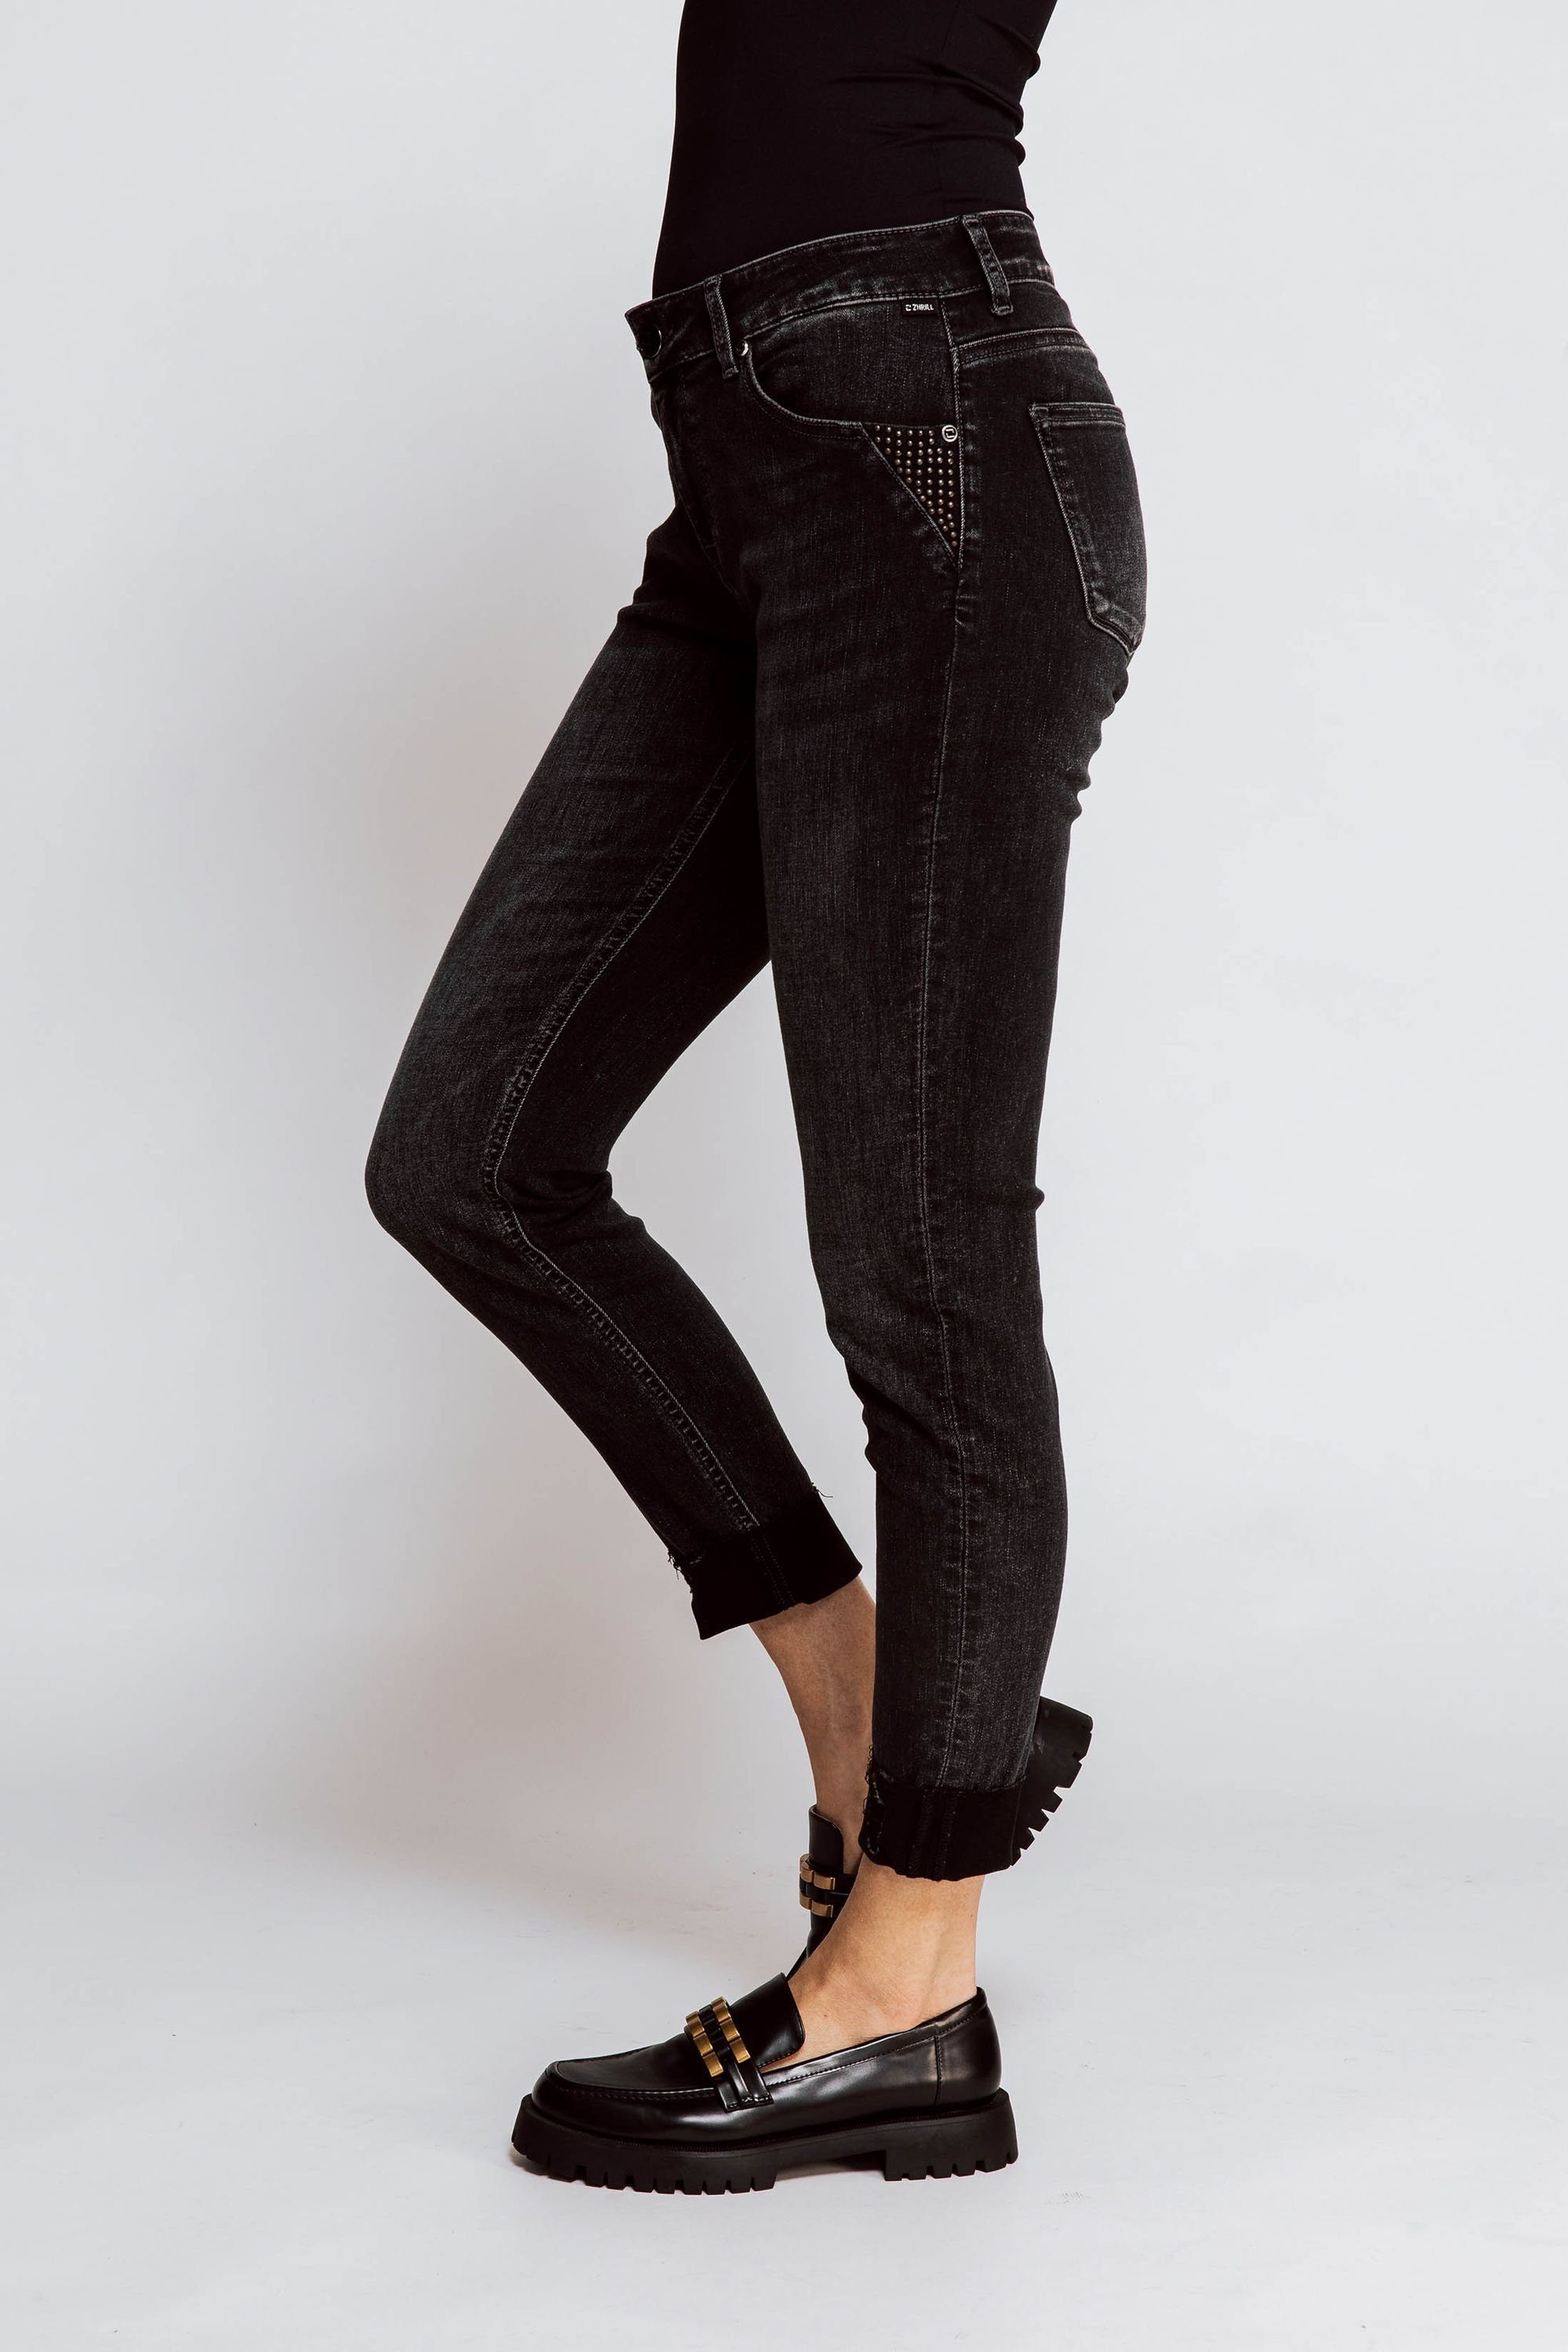 Zhrill Jeans Black NOVA Skinny Tragekomfort angenehmer Skinny-fit-Jeans